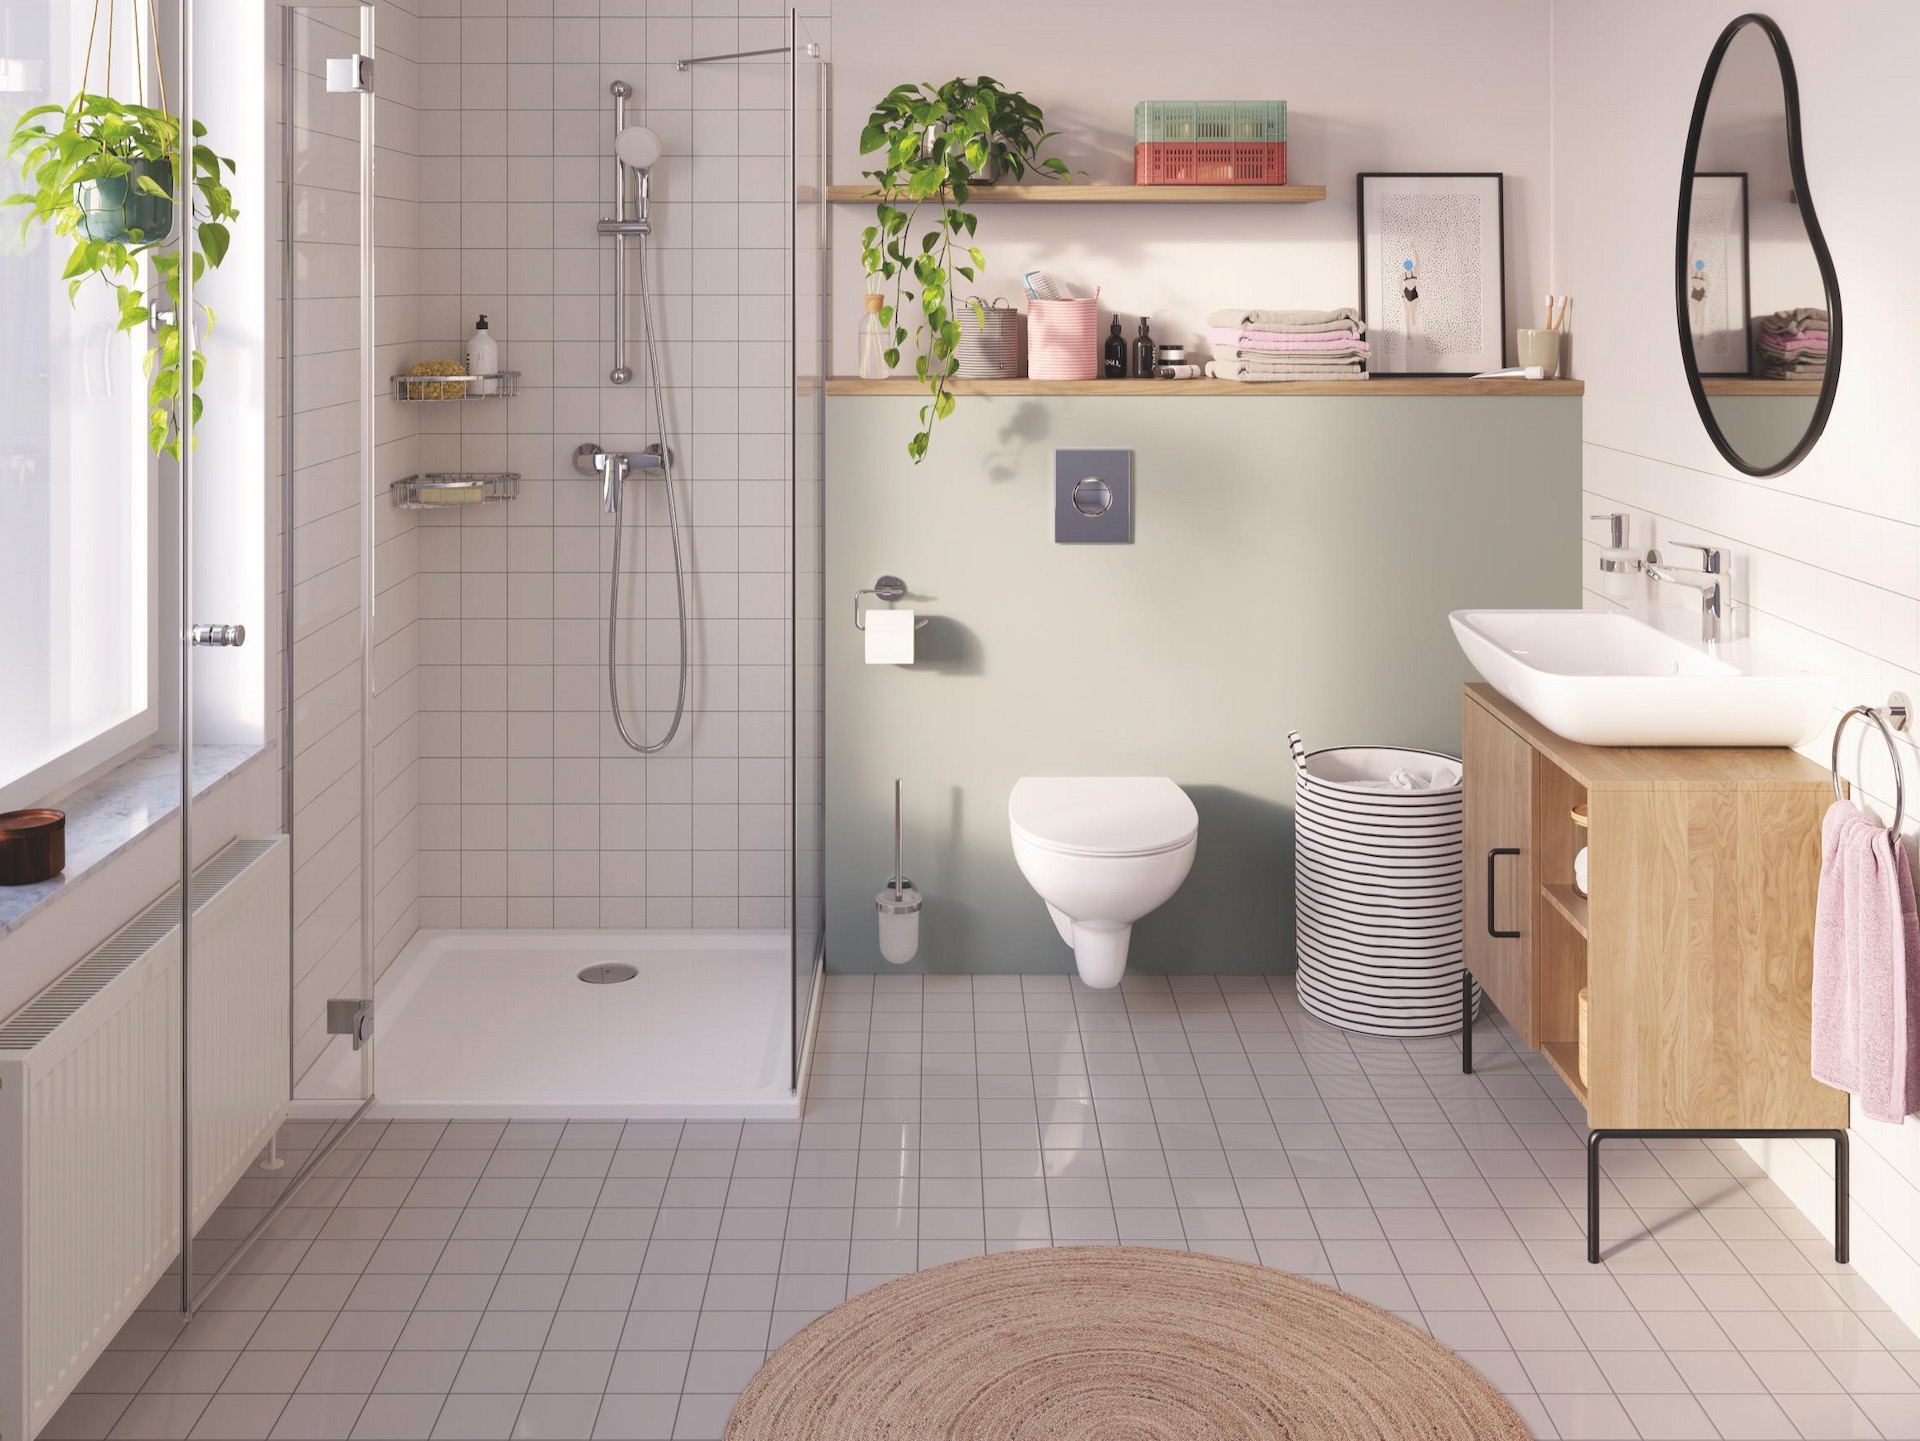 Bathroom with corner shower, tiled floor and rug